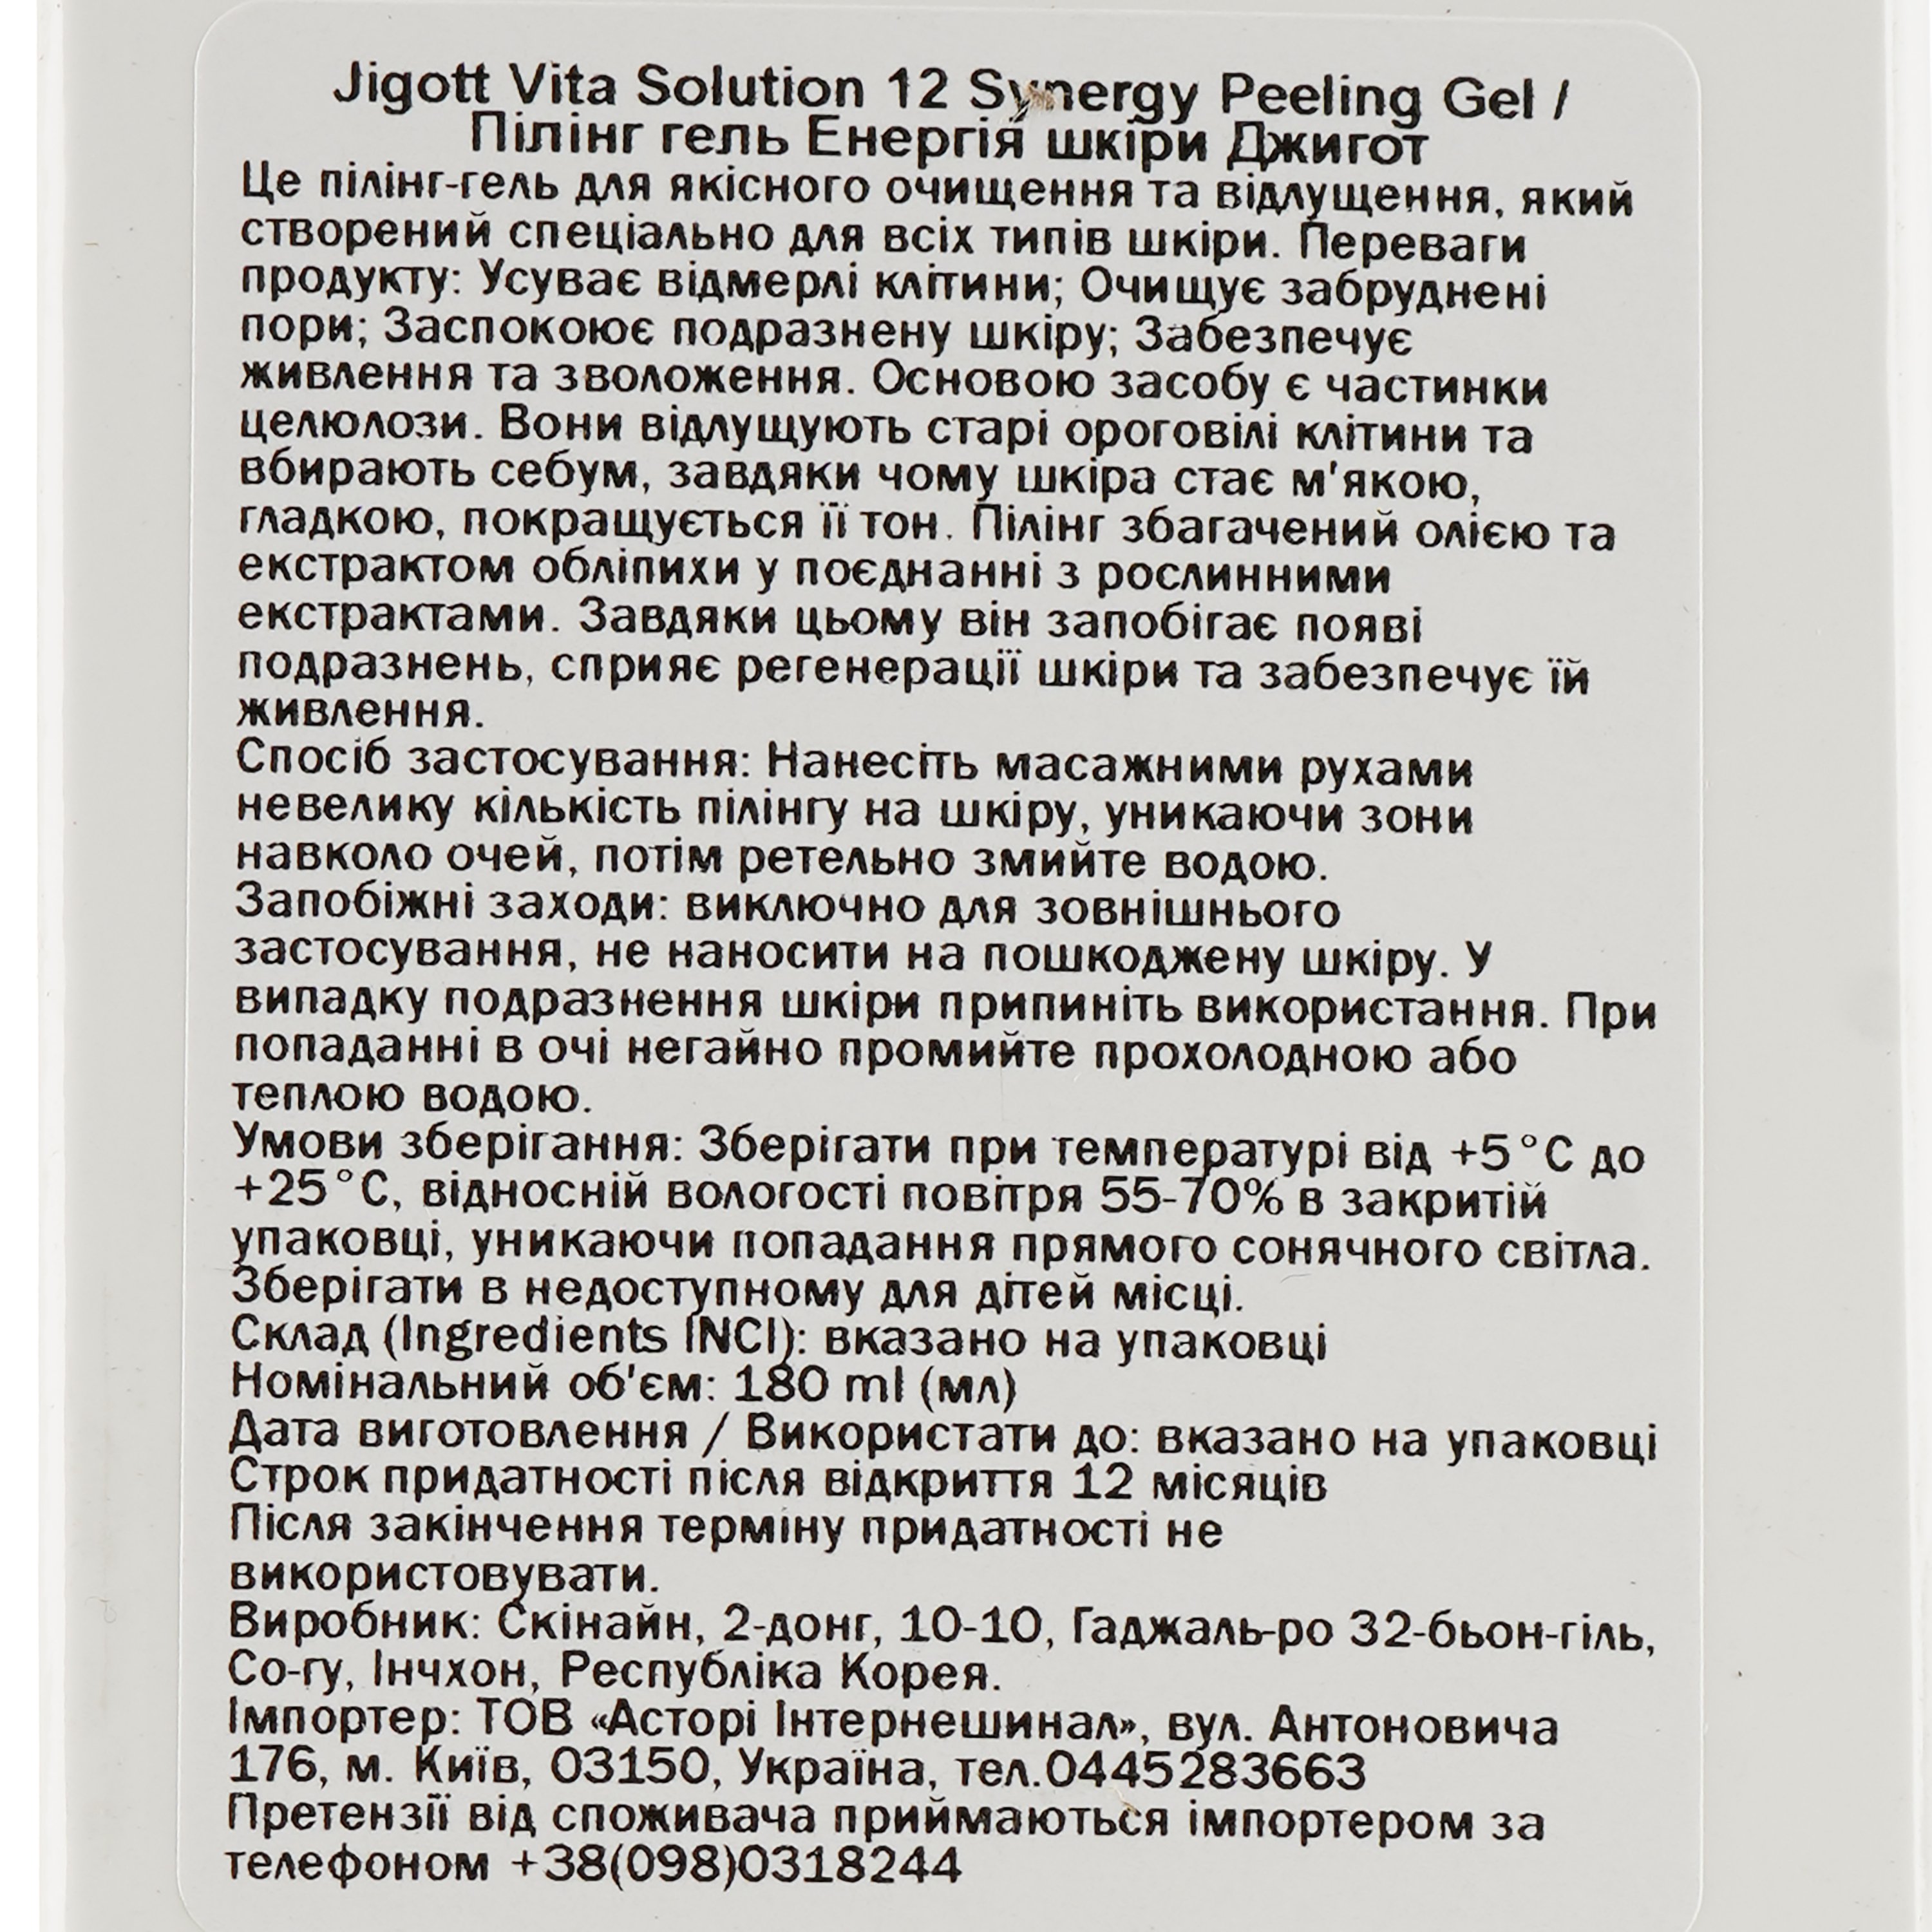 Пилинг-гель Jigott Vita Solution 12 Synergy Peeling Gel Оздоравливающий, 180 мл - фото 3